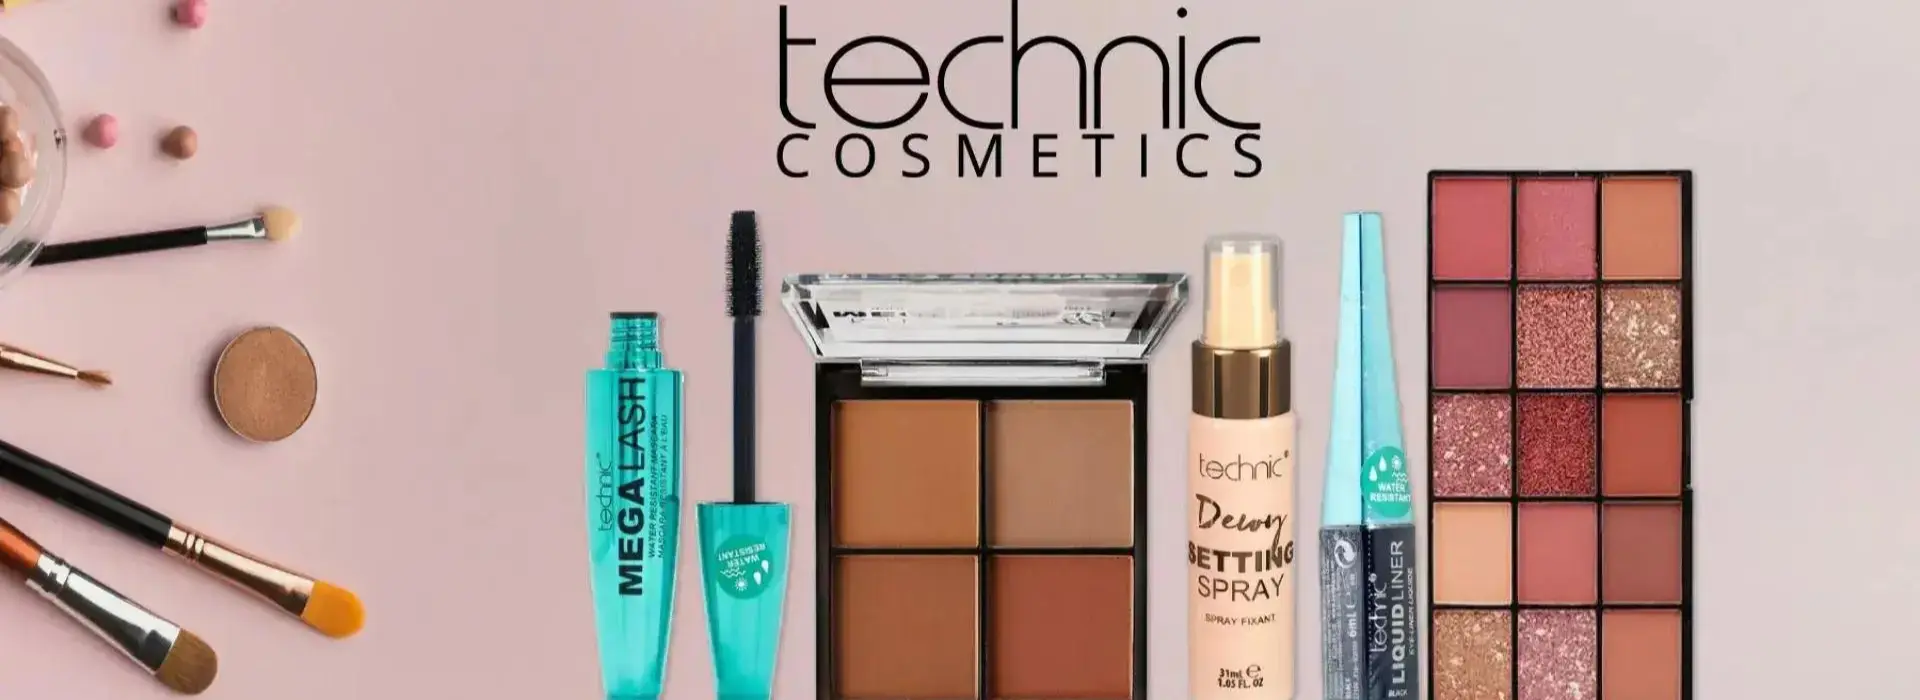 Technic Cosmetics & Make Up